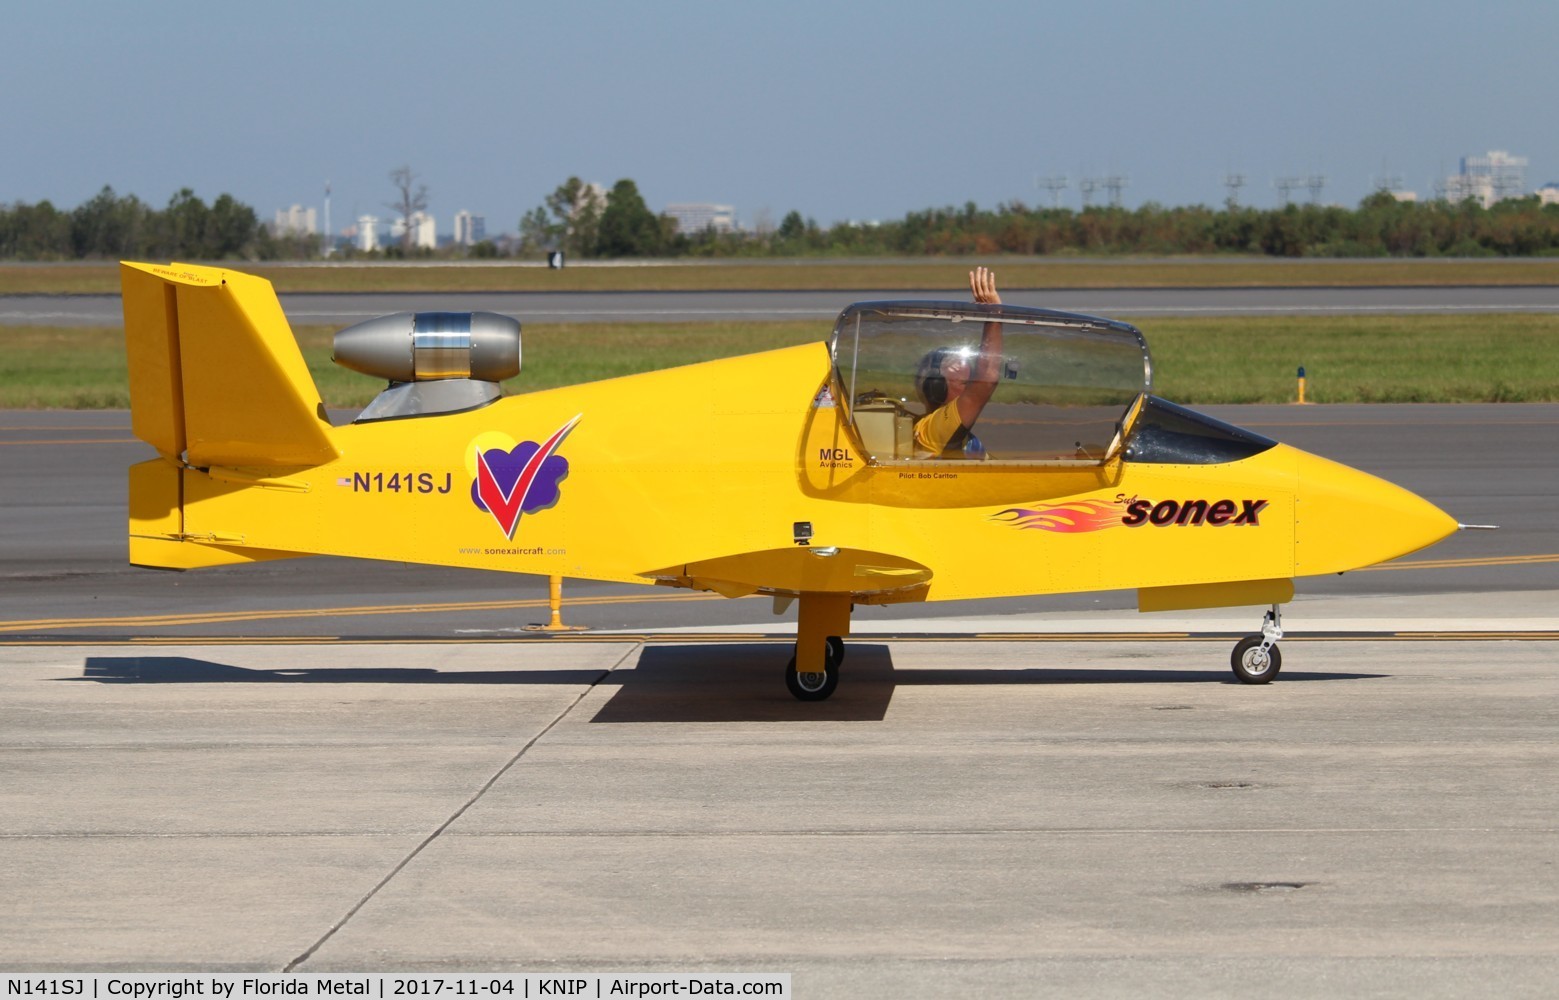 N141SJ, 2014 Sonex JSX-2 C/N 001, Sonex Jet zx